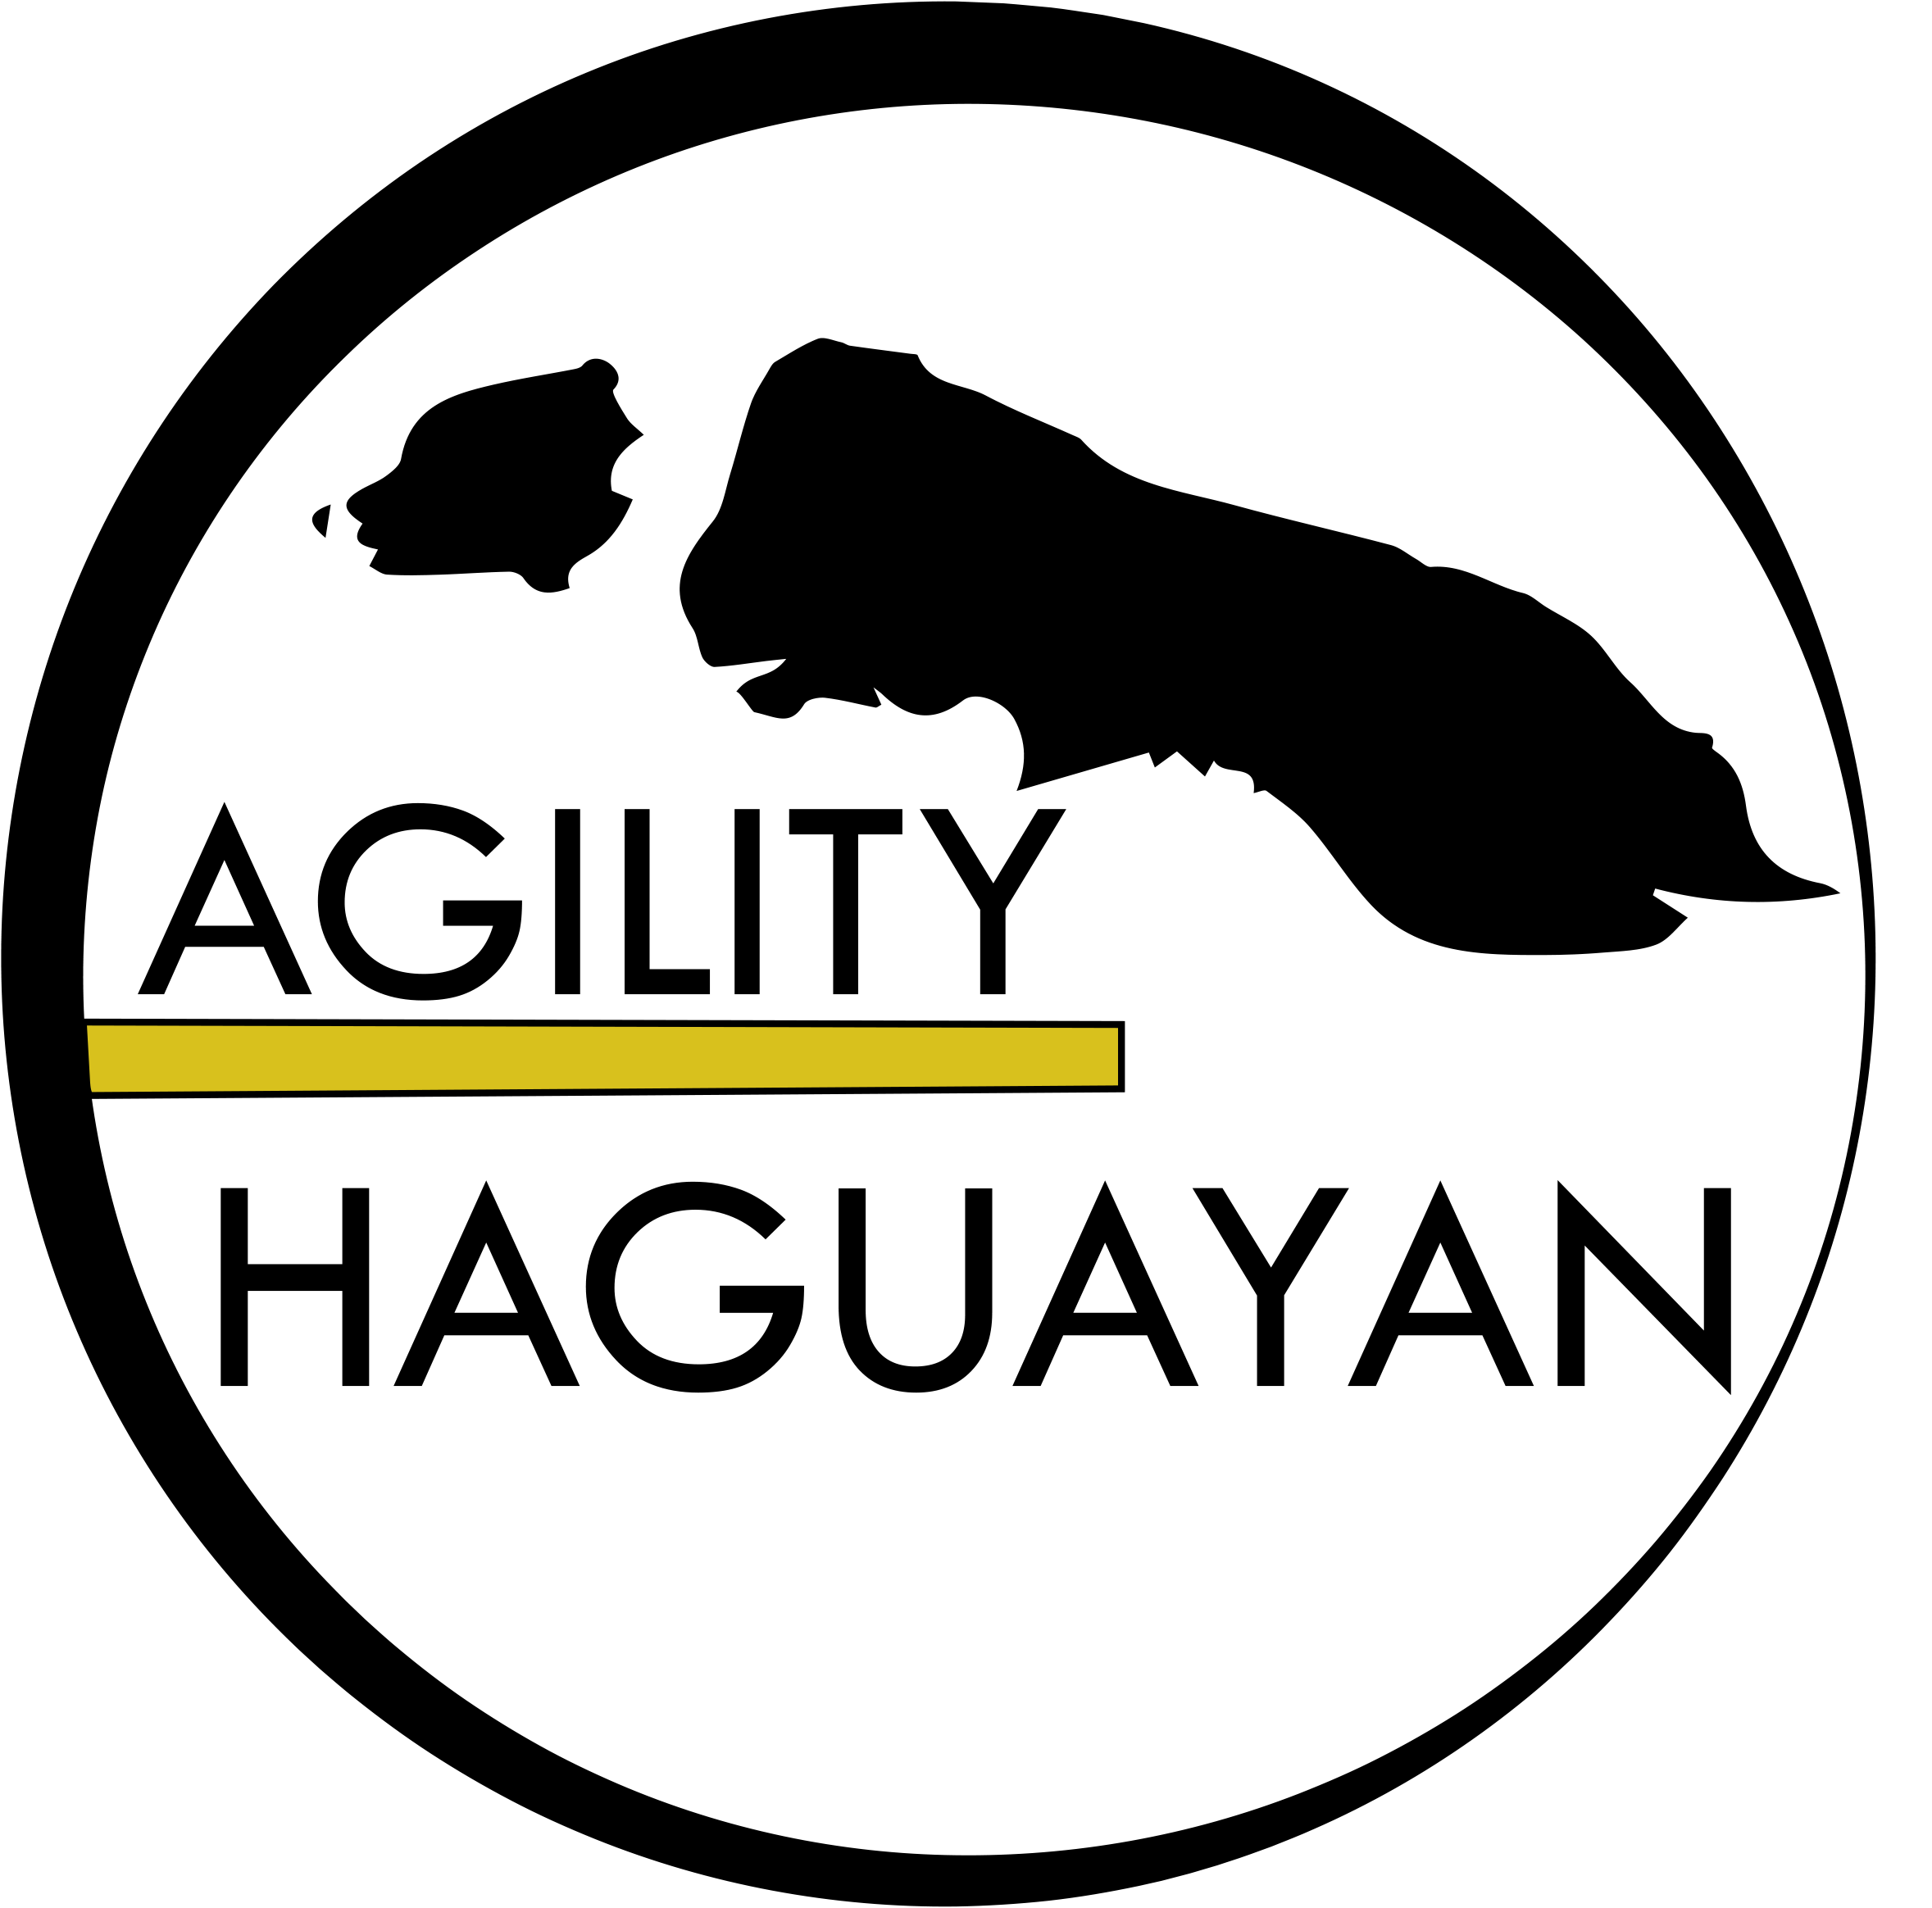 Agility Haguayan